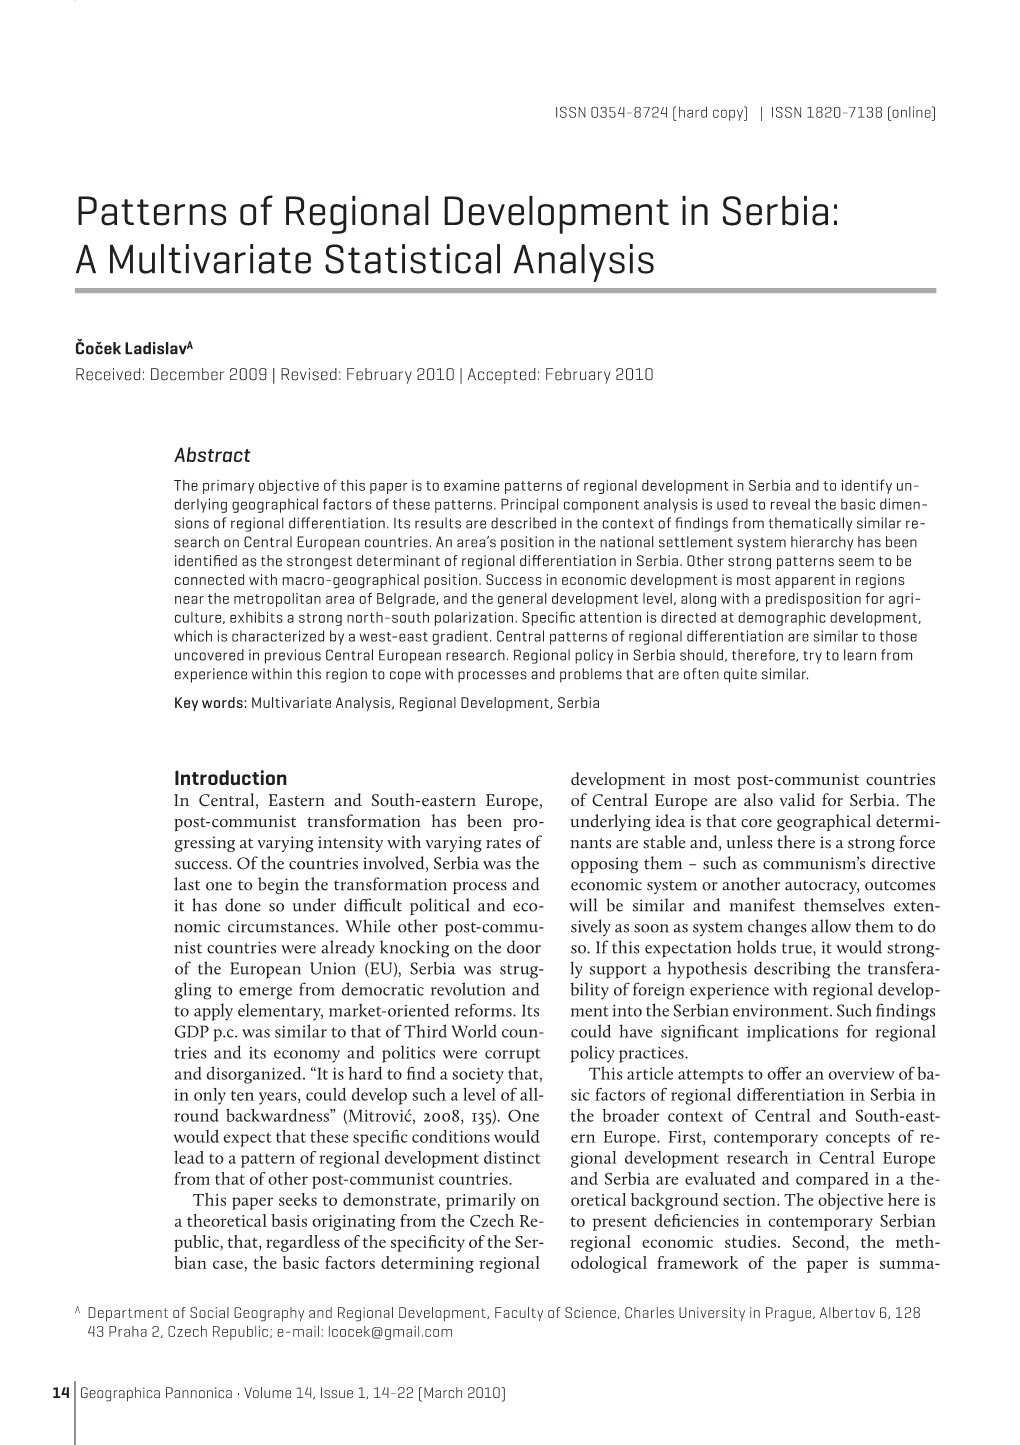 A Multivariate Statistical Analysis